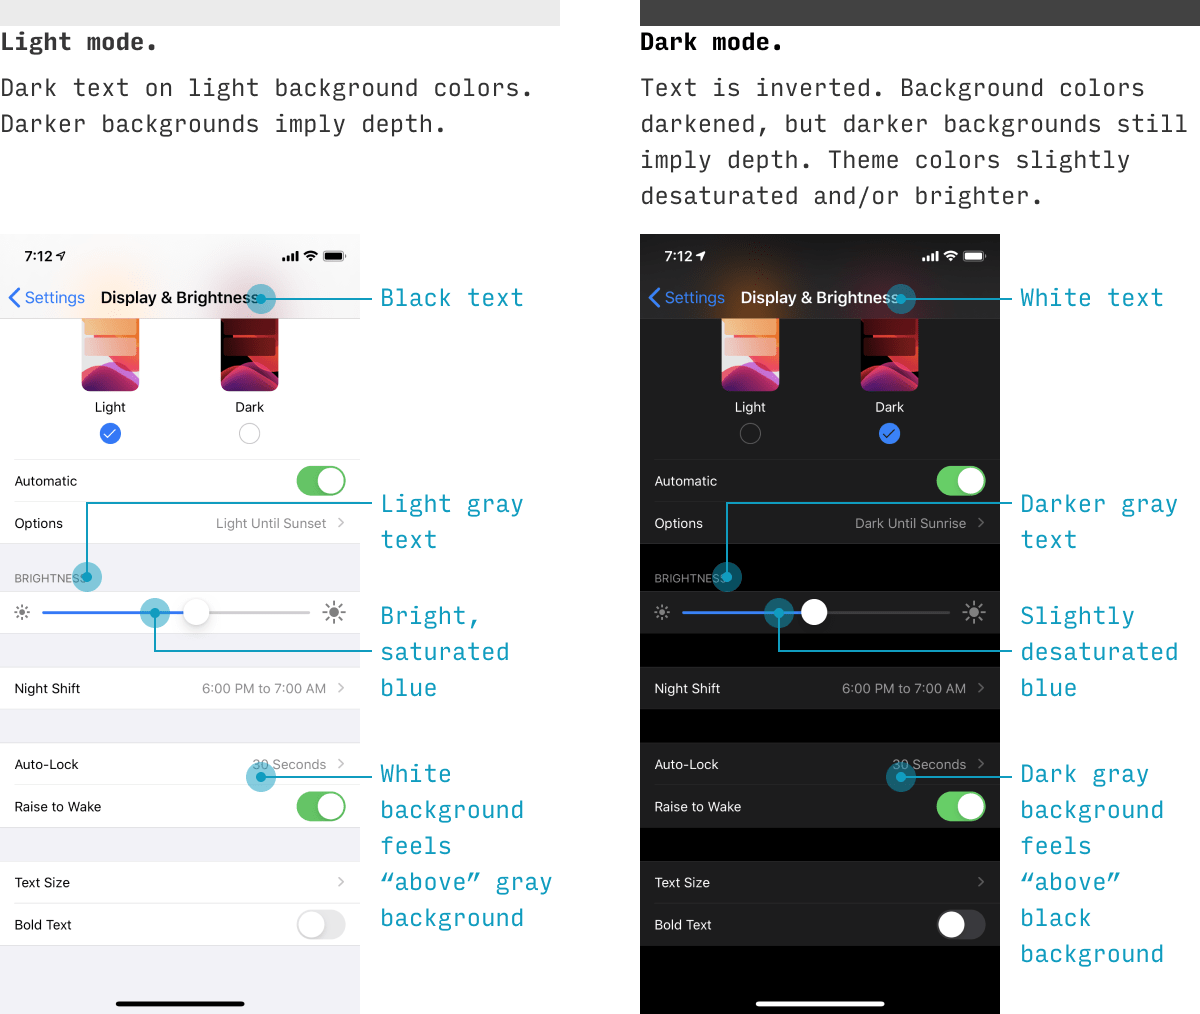 iPhone app dark mode vs. light mode comparison